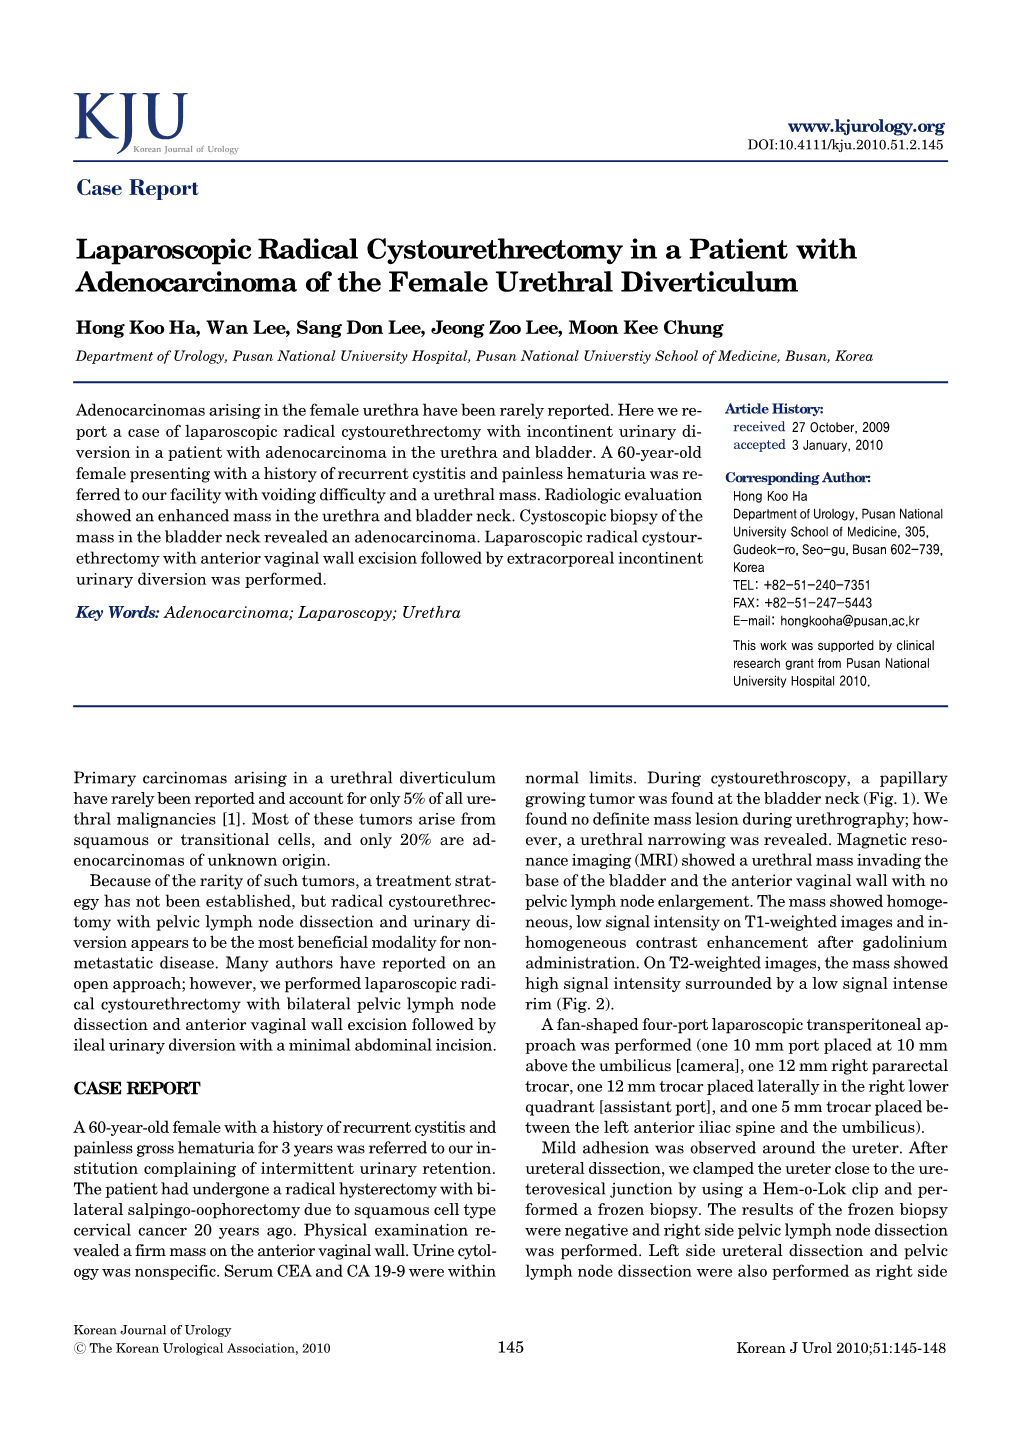 Laparoscopic Radical Cystourethrectomy in a Patient with Adenocarcinoma of the Female Urethral Diverticulum